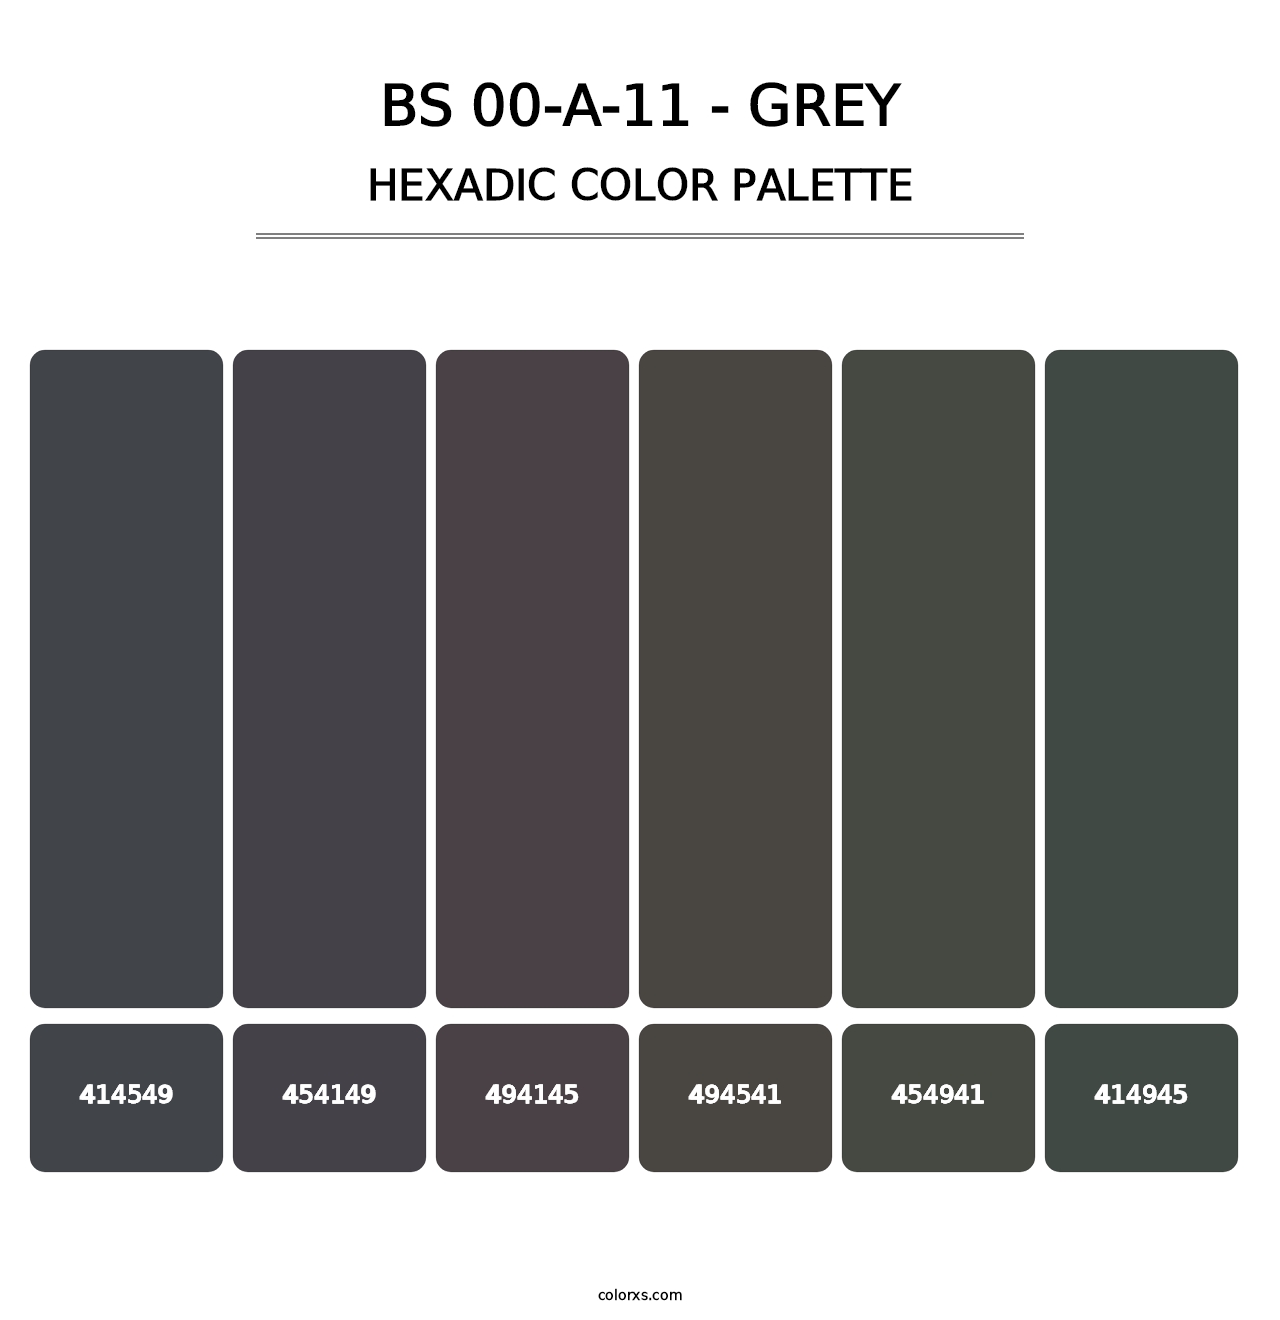 BS 00-A-11 - Grey - Hexadic Color Palette